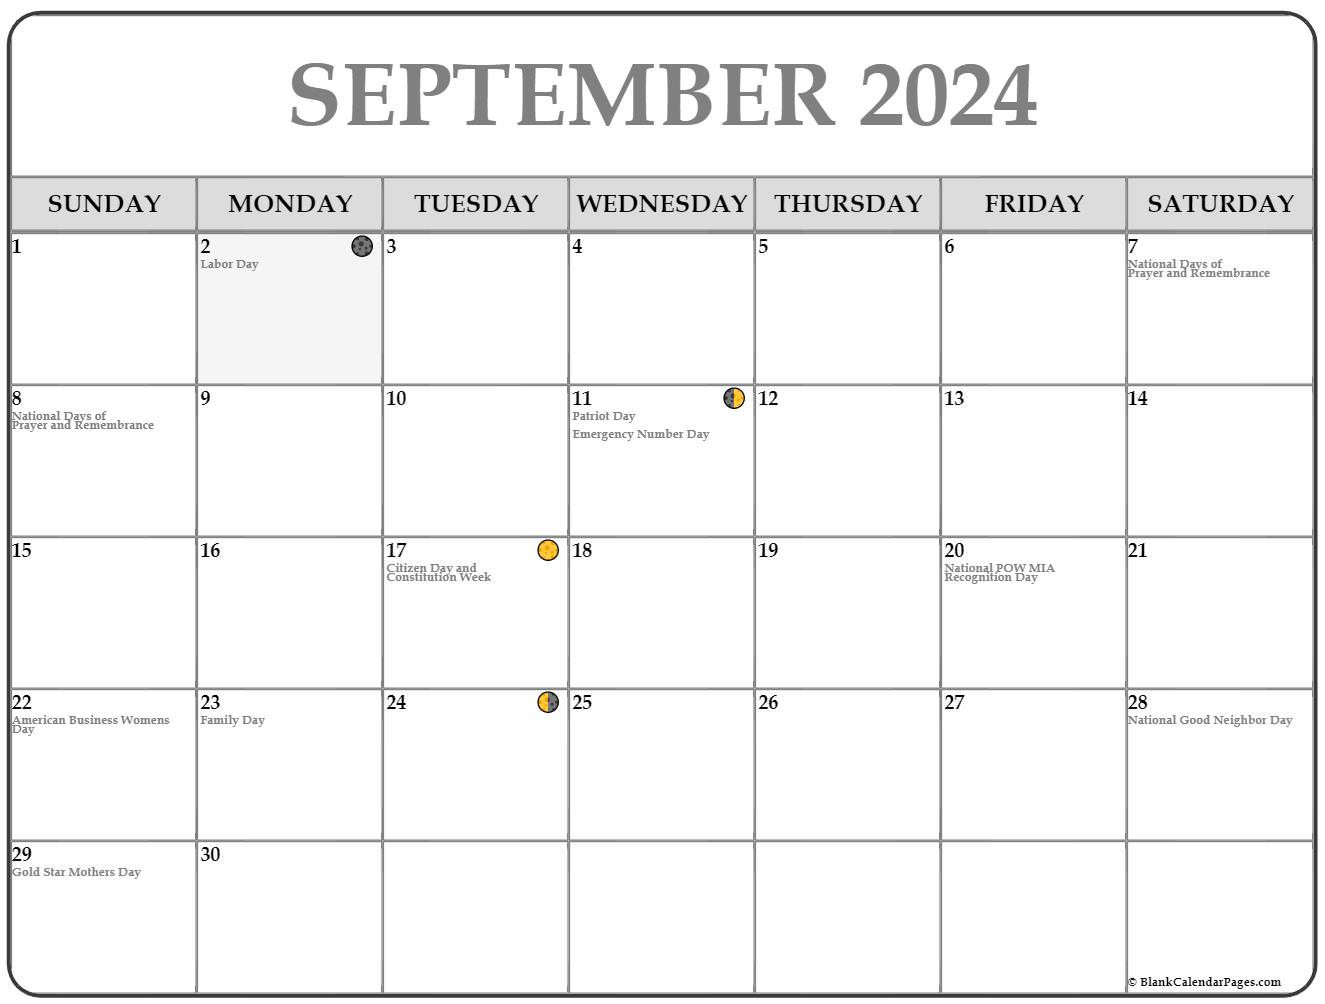 September 2024 Lunar Calendar Moon Phase Calendar